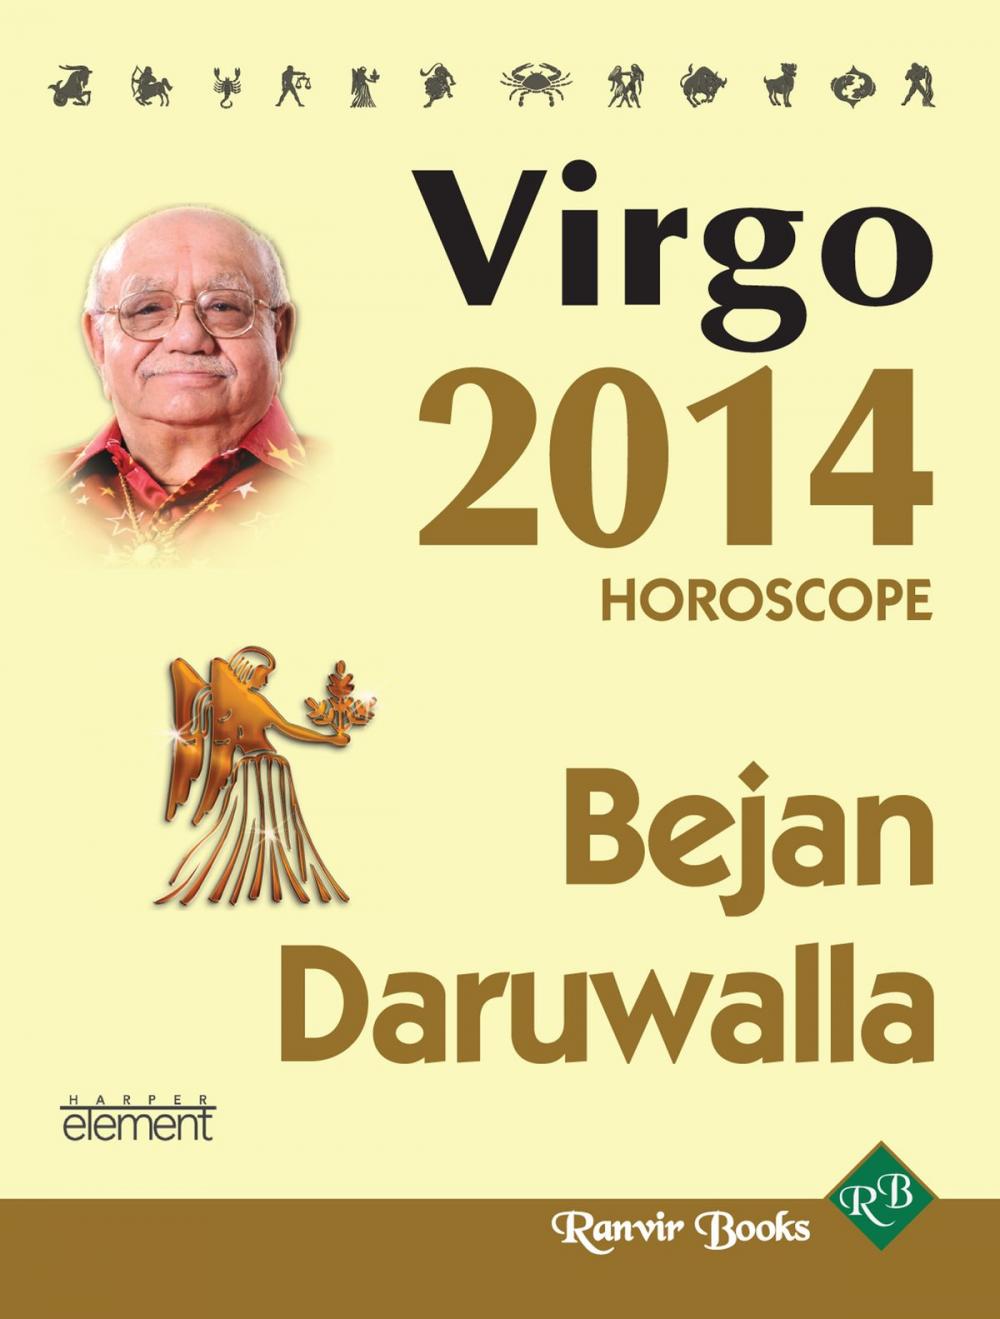 Big bigCover of Your Complete Forecast 2014 Horoscope - VIRGO